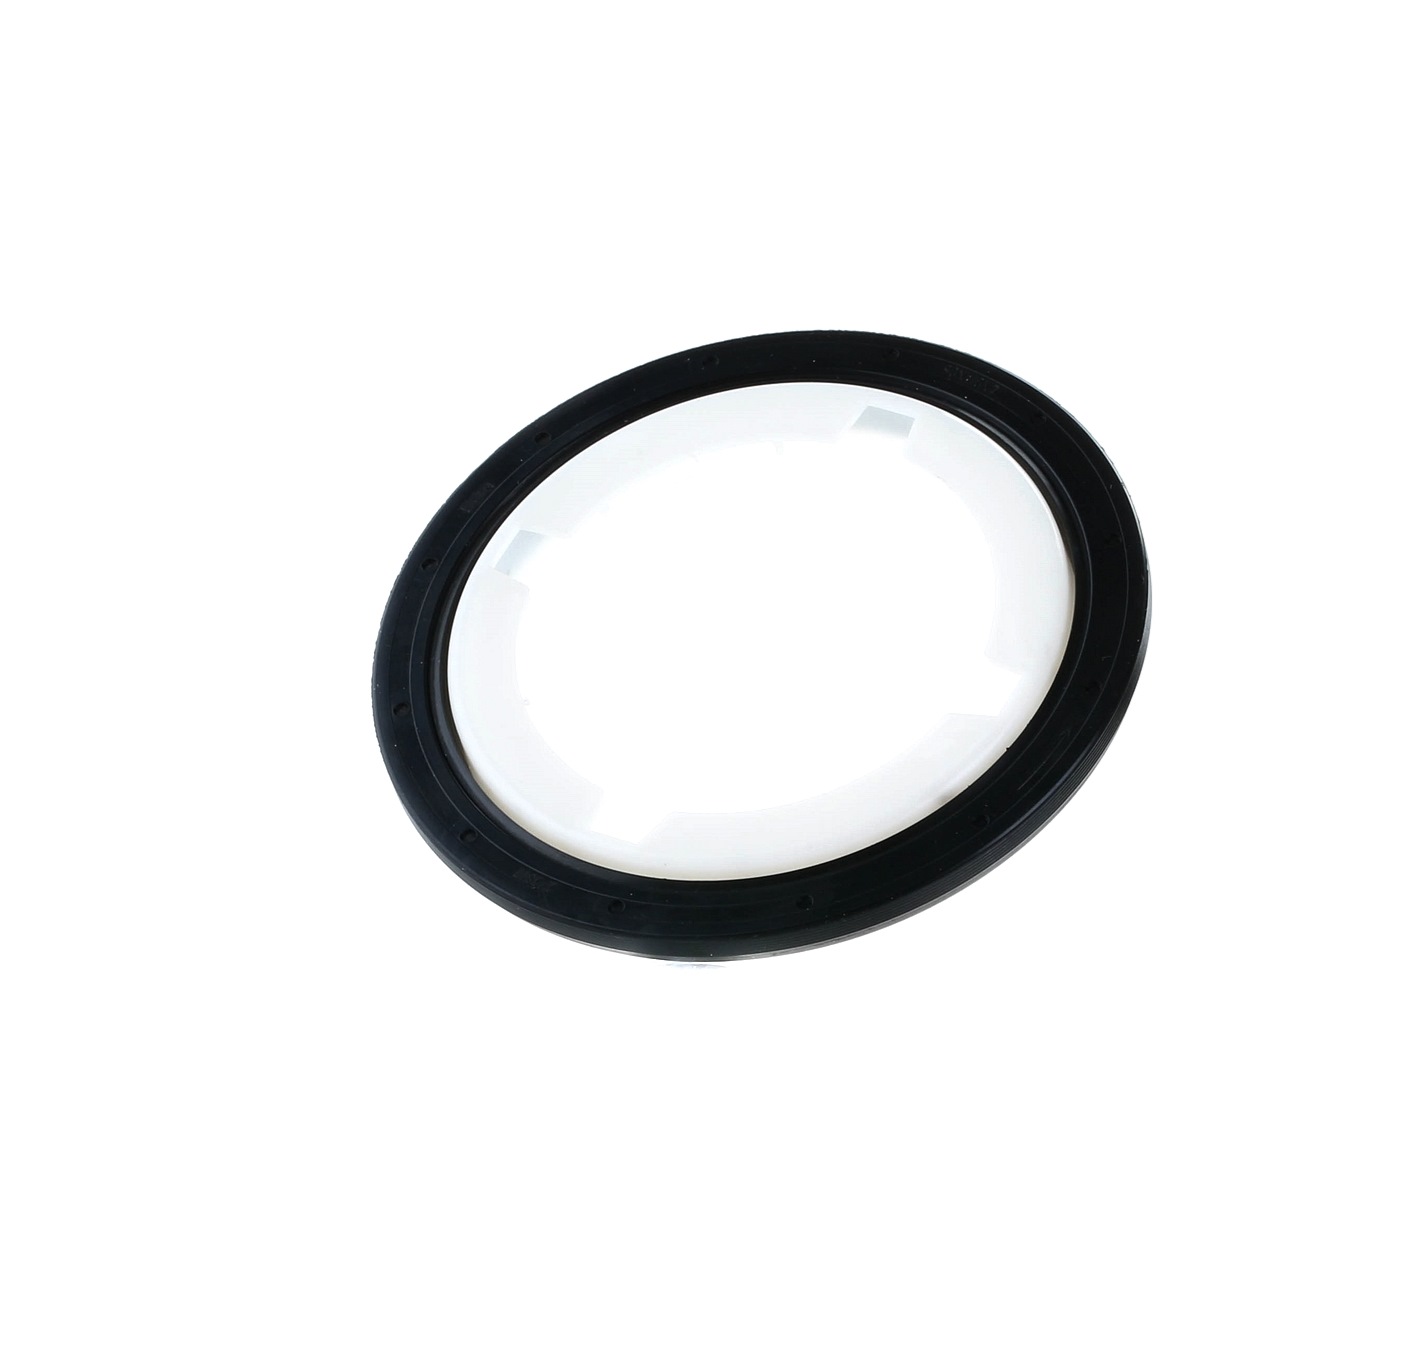 ELRING 394.011 Crankshaft seal with mounting sleeve, PTFE (polytetrafluoroethylene)/ACM (polyacrylate rubber)